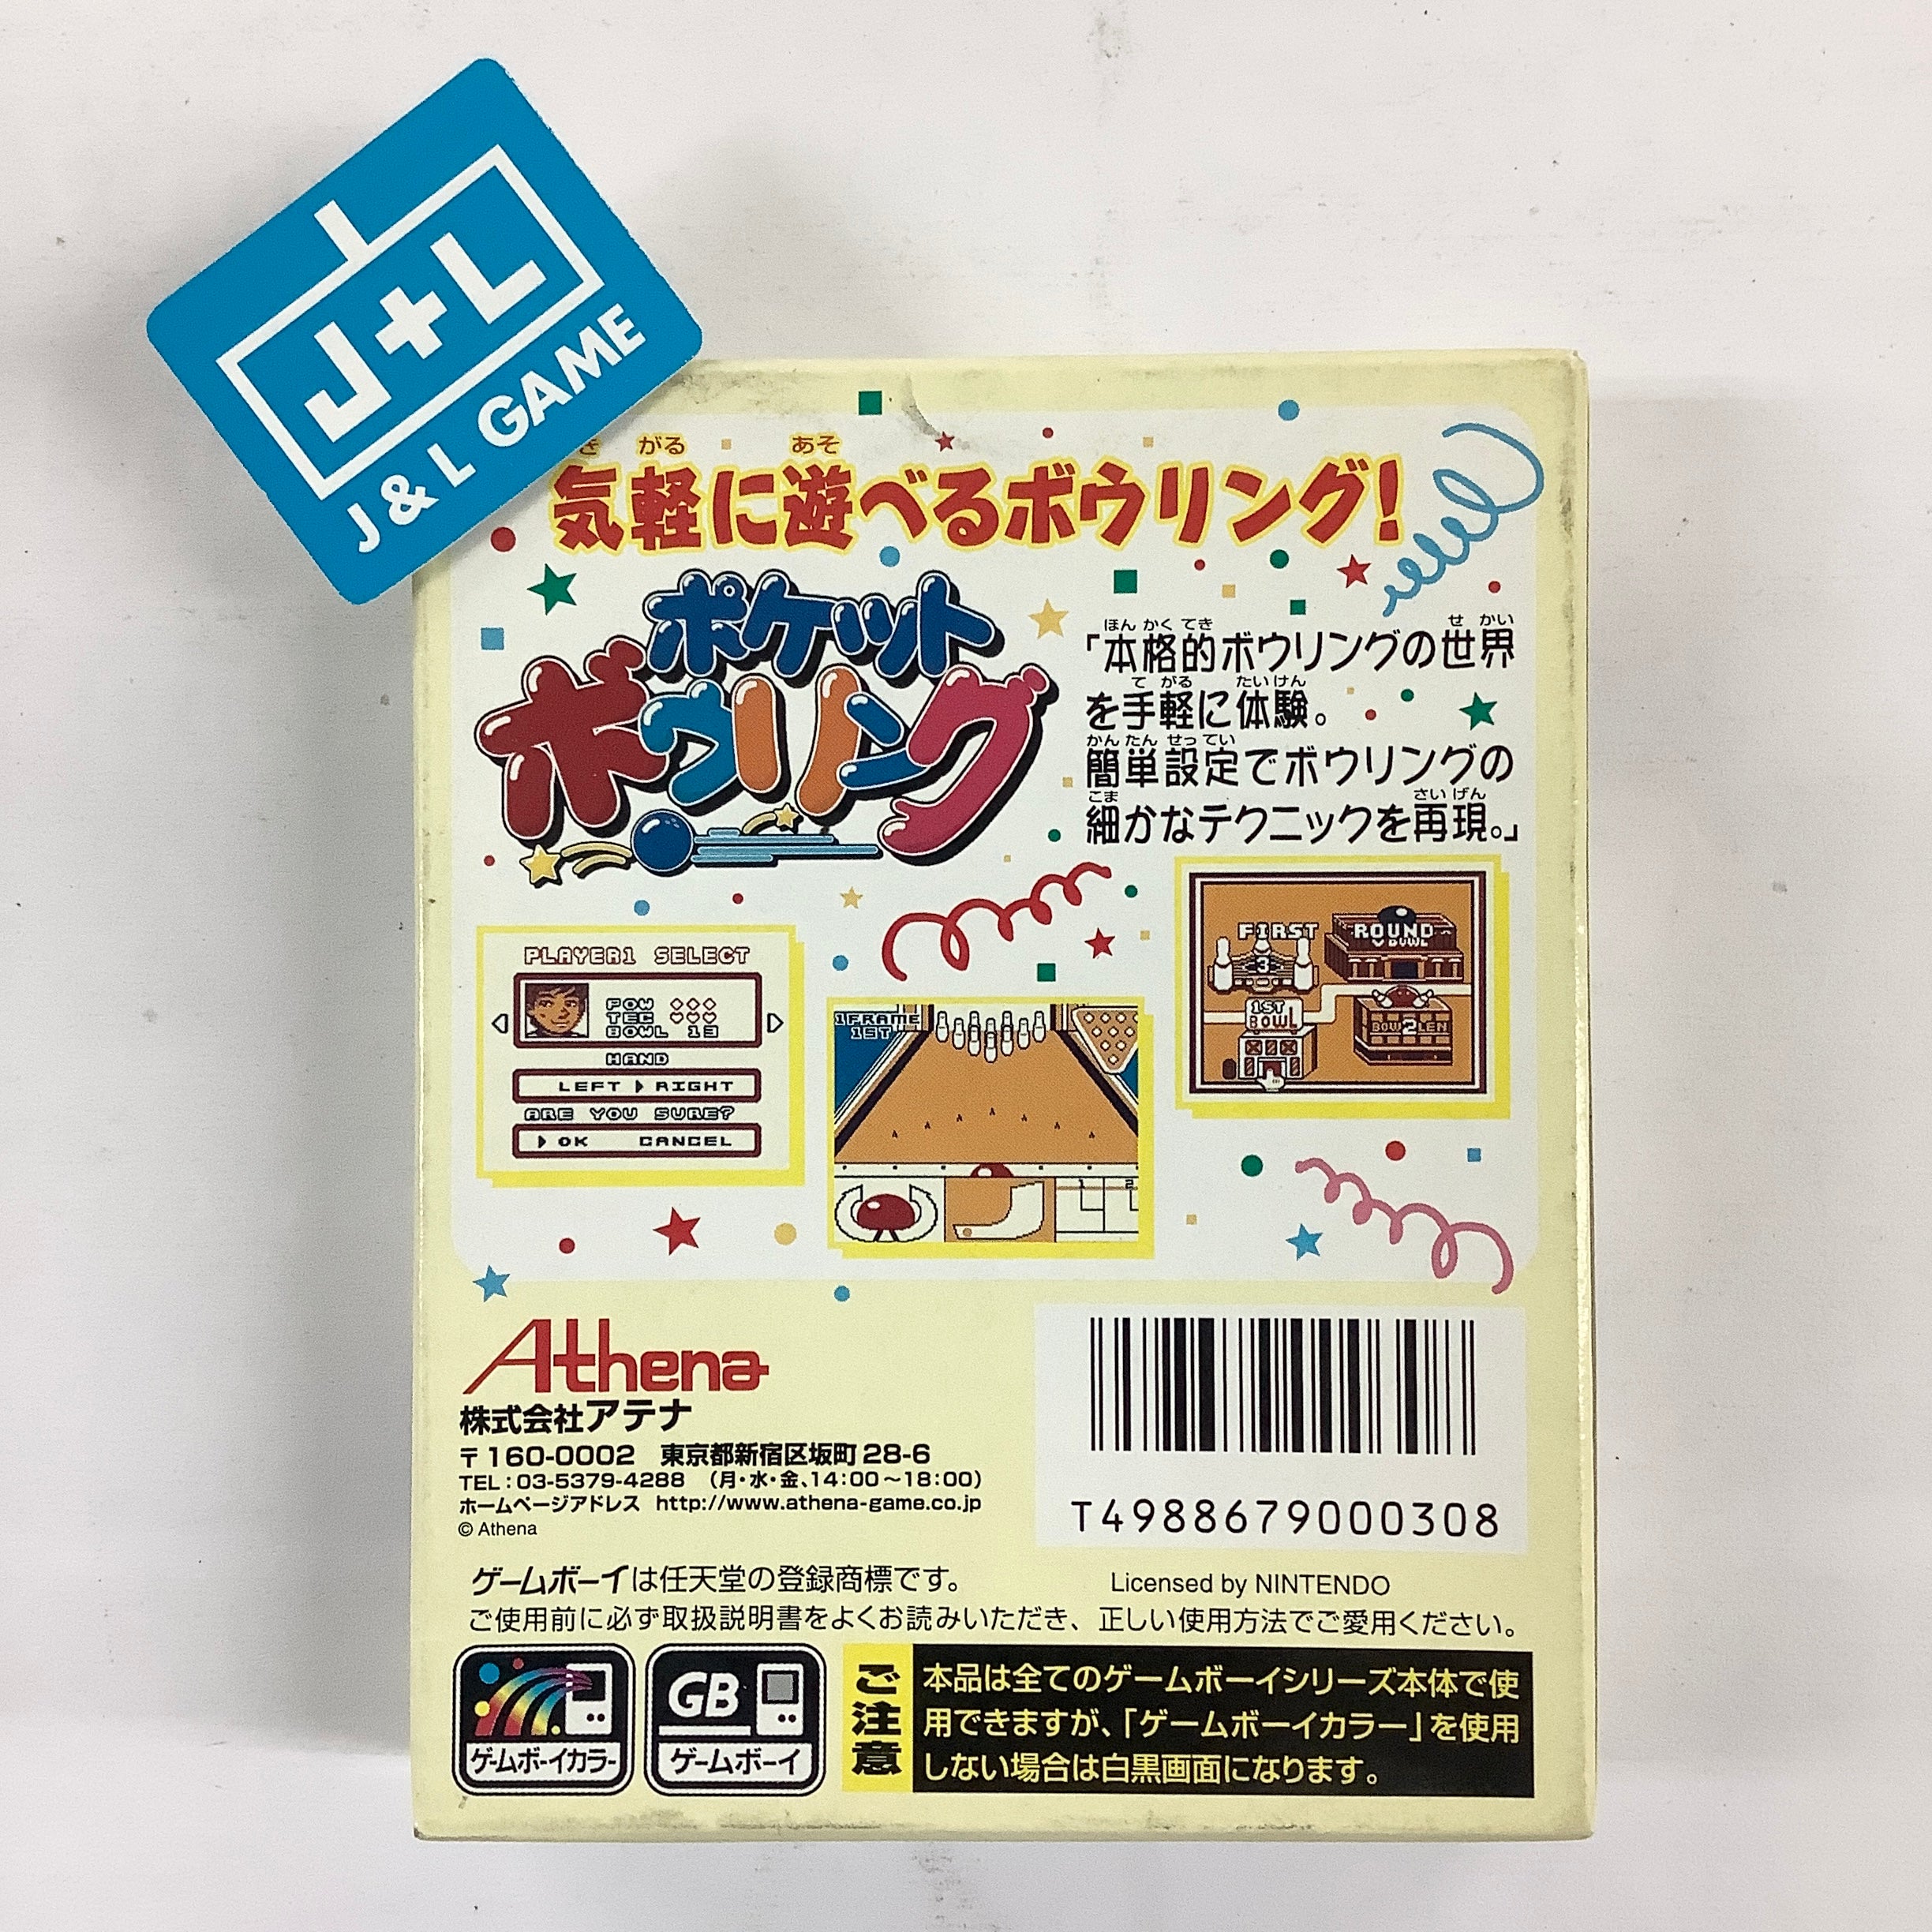 Pocket Bowling - (GBC) Game Boy Color (Japanese Import) Video Games Jaleco Entertainment   